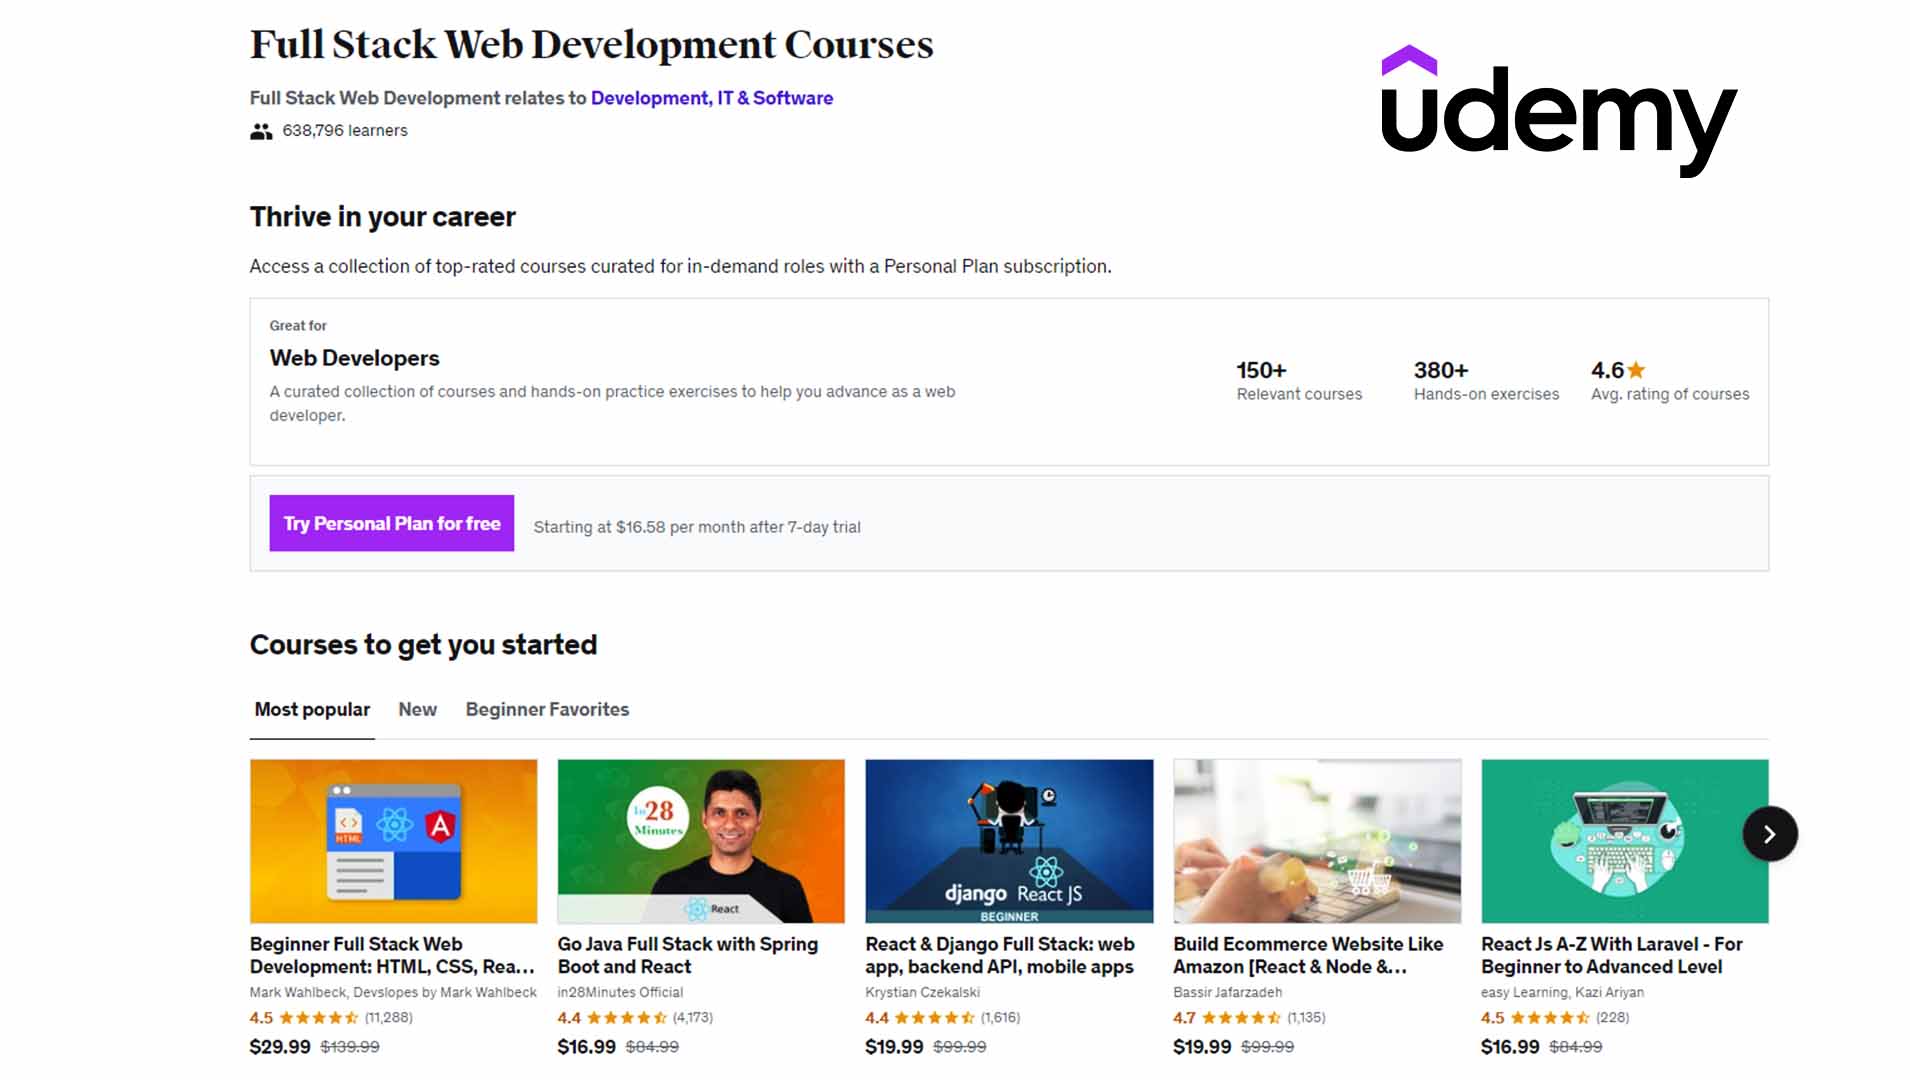 Full-stack Web Development Course